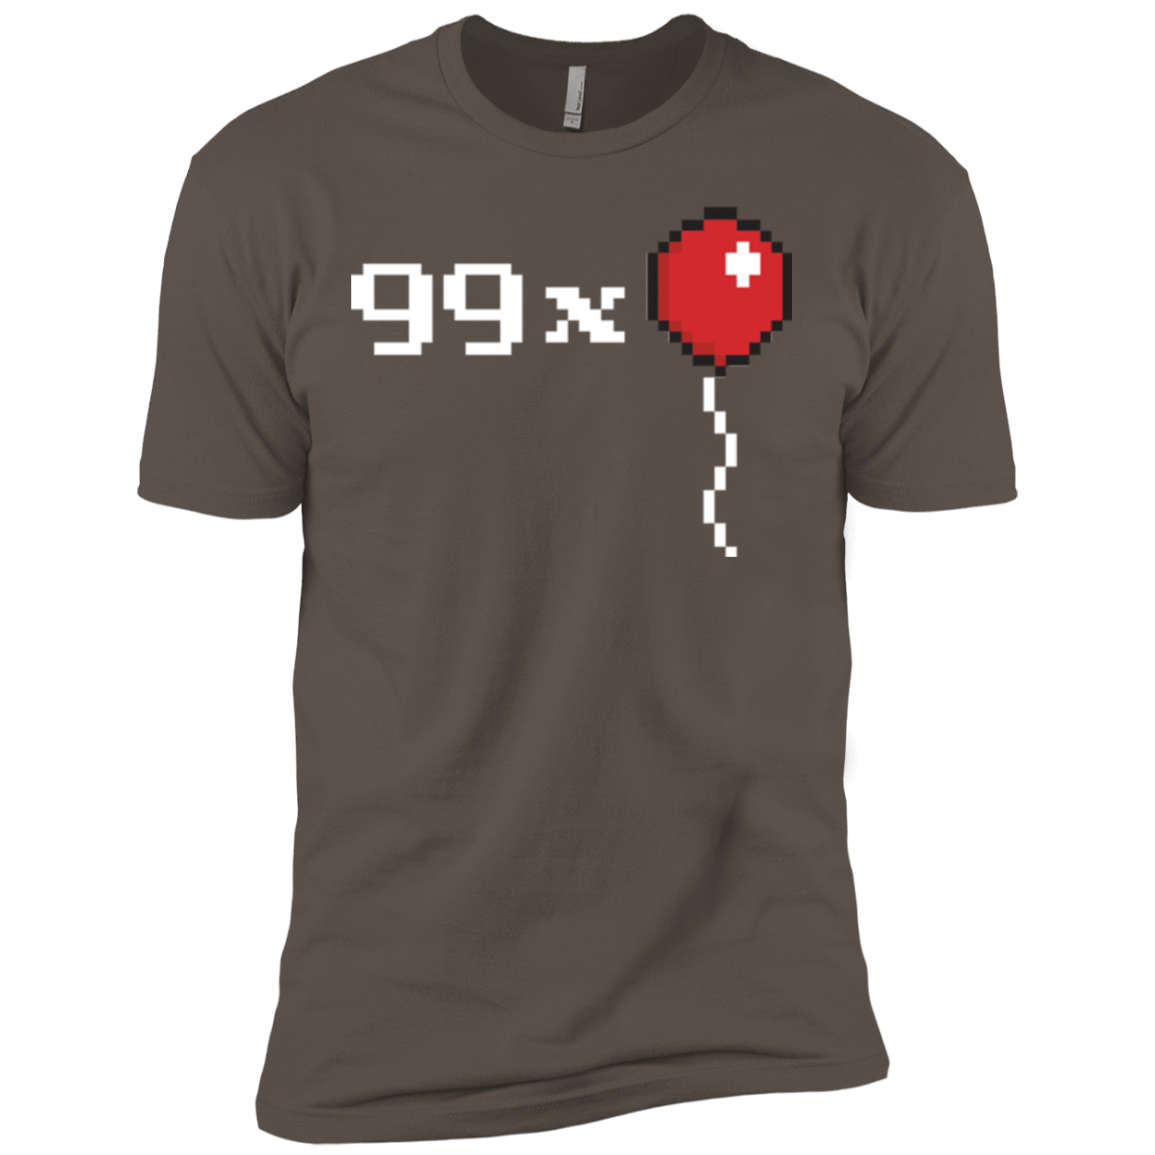 T-Shirts Warm Grey / X-Small 99x Balloon Men's Premium T-Shirt